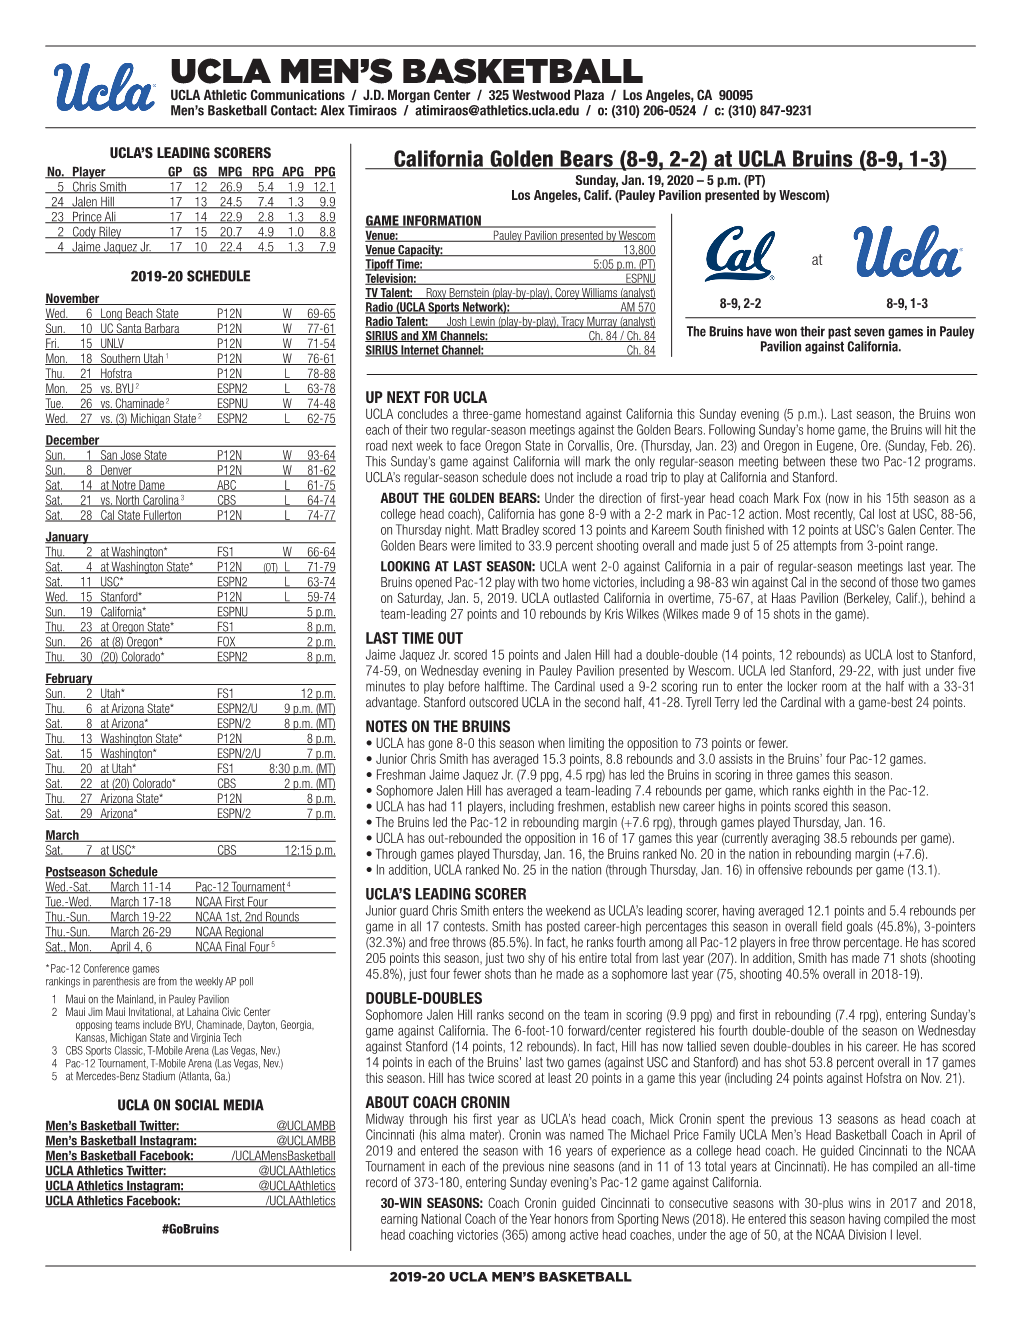 UCLA Men's Basketball UCLA’Sucla SEASON/Careerseason/Career Statistics (As of Jan 15, STATS 2020) 2019-20 ROSTER All Games